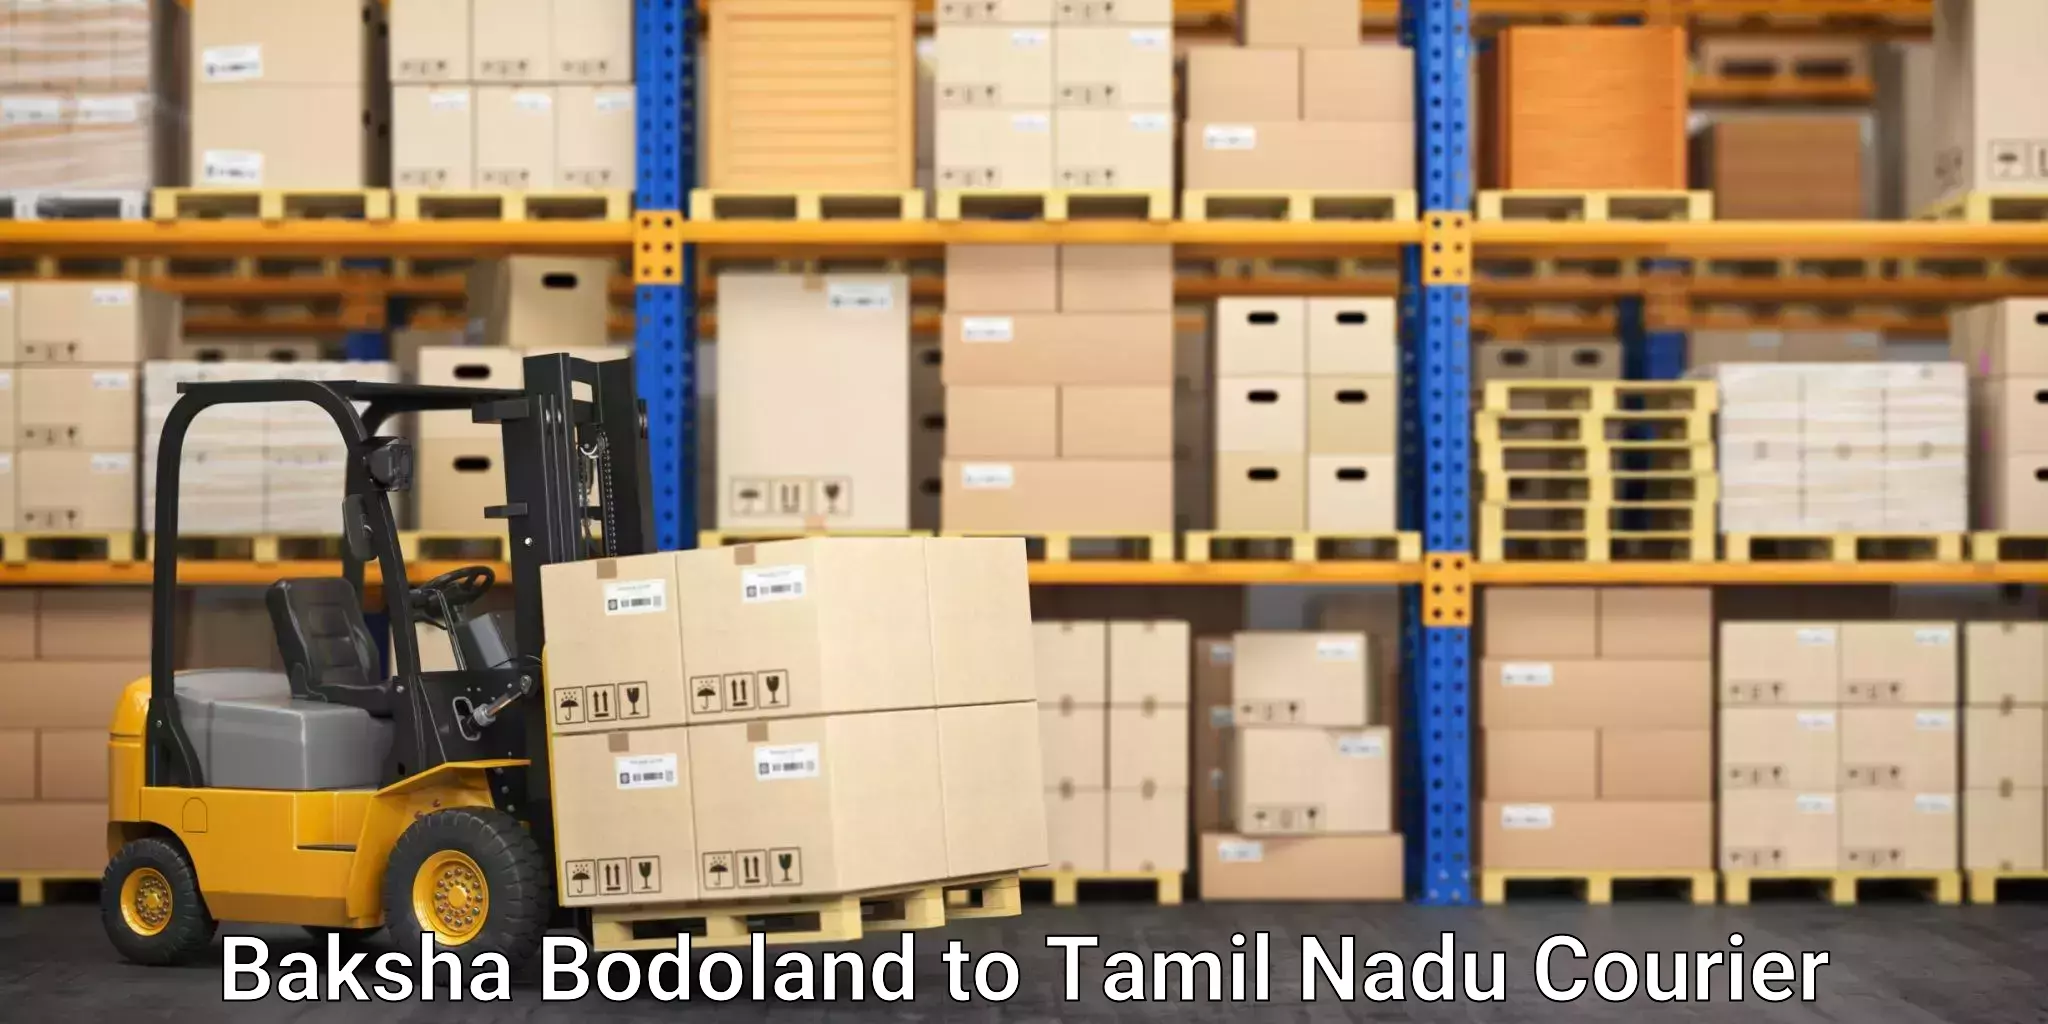 Corporate courier solutions Baksha Bodoland to Tamil Nadu